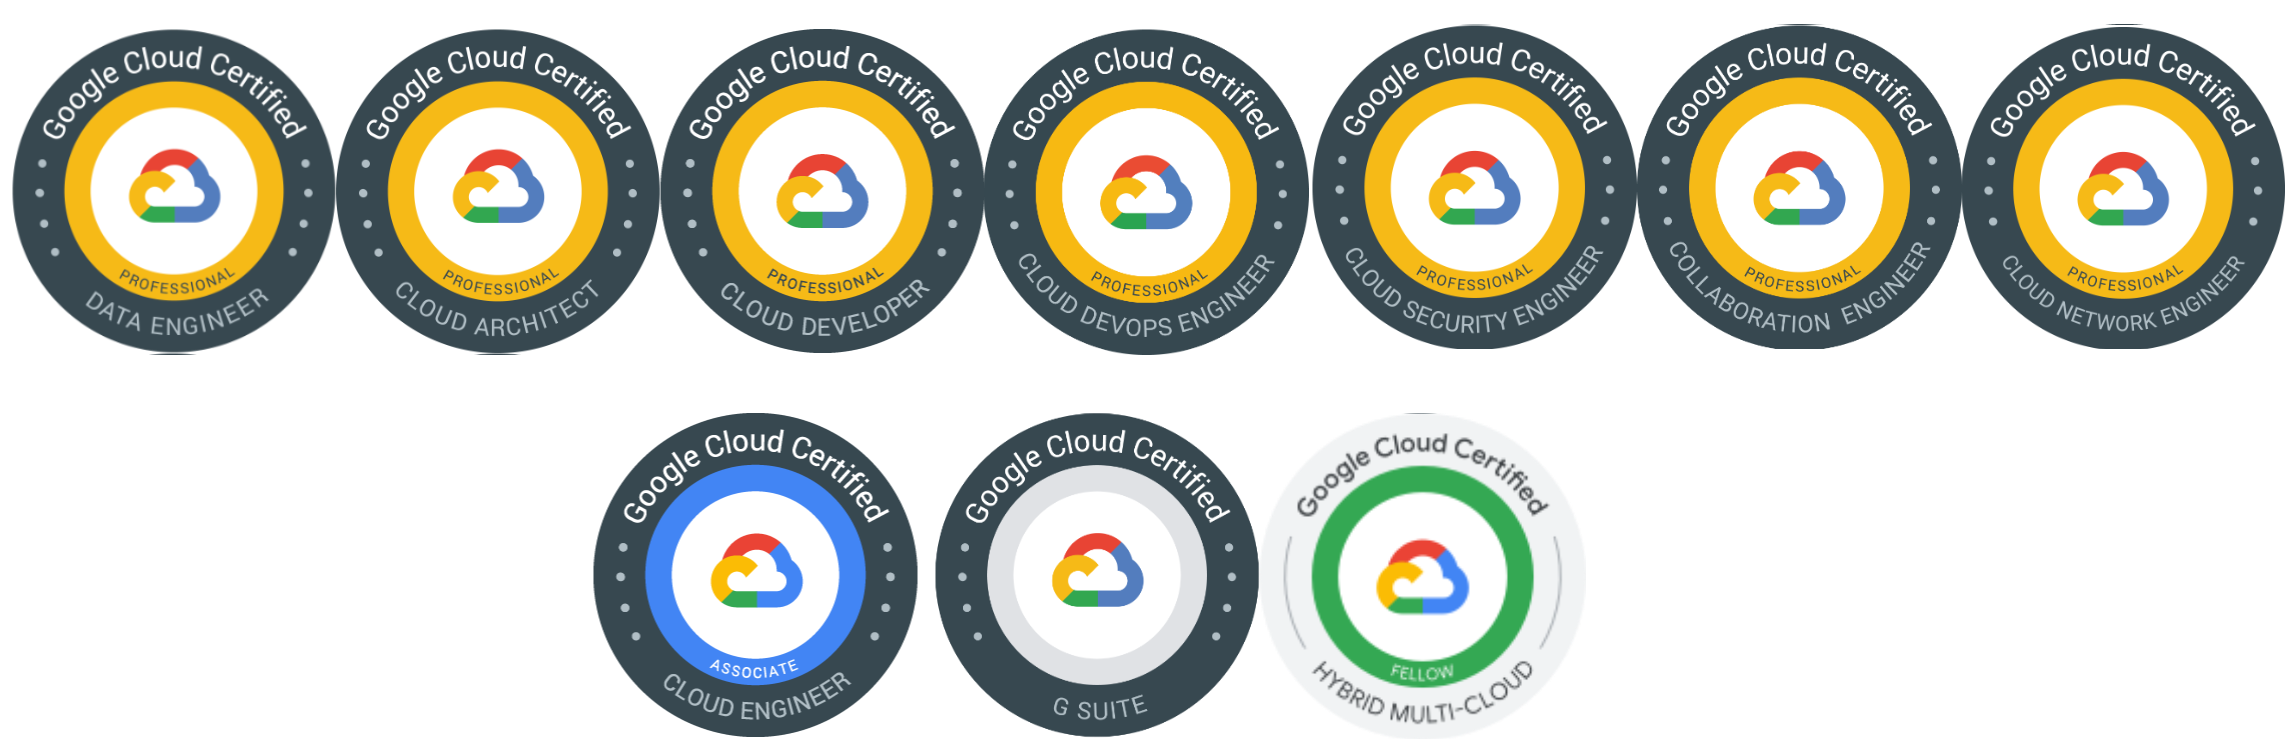 google-cloud-certification-path.png